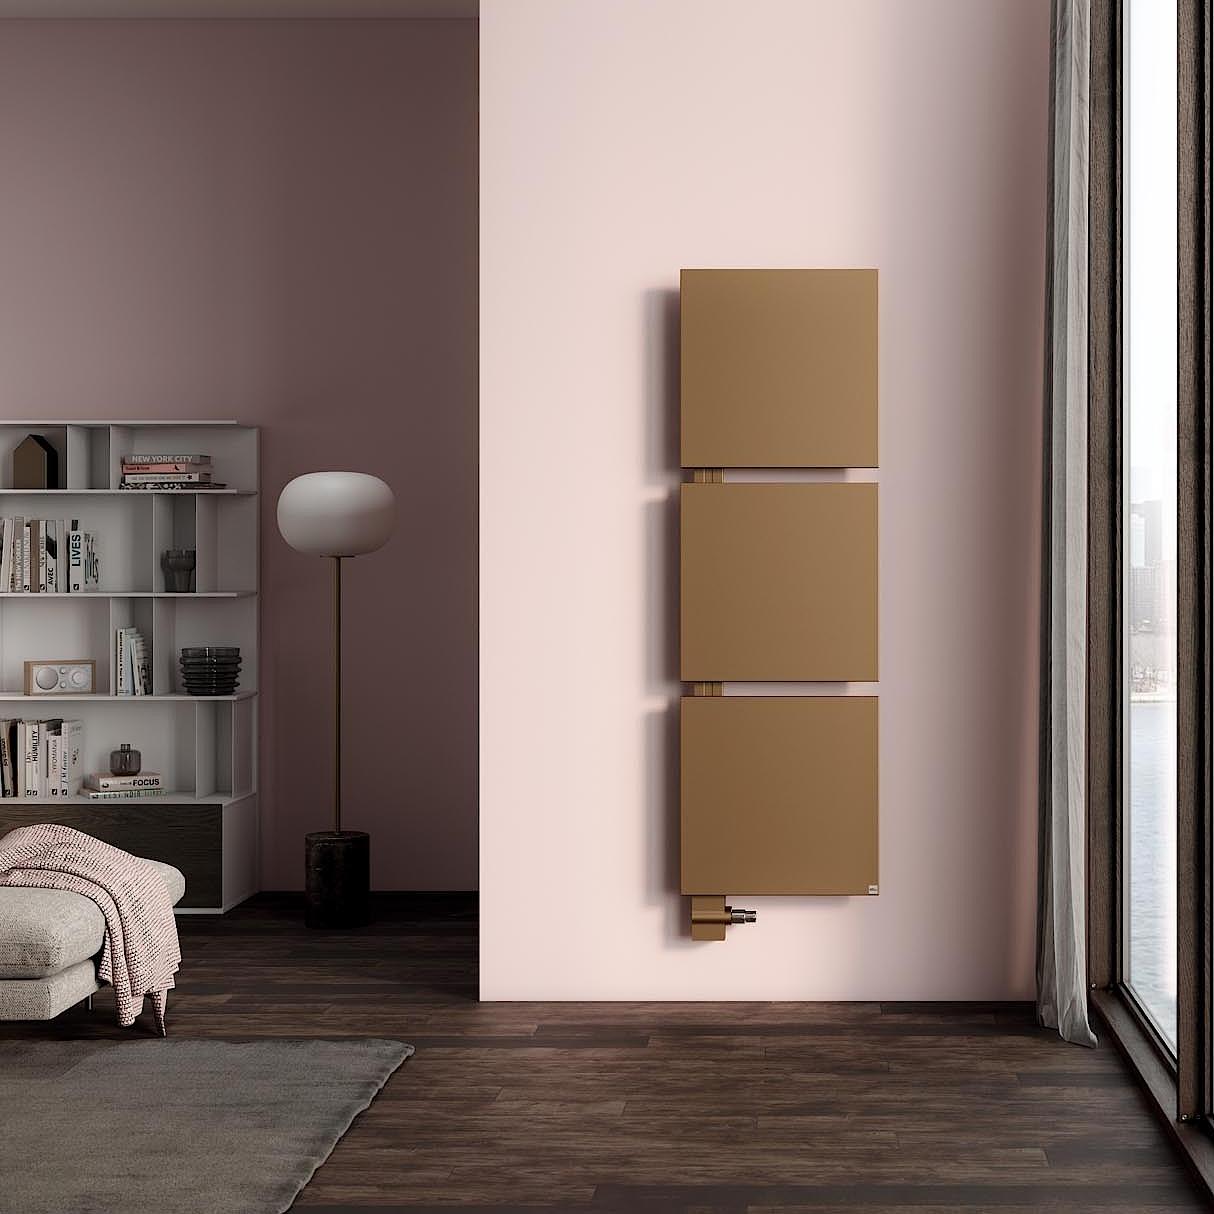 Kermi Signo design and bathroom radiators – clear lines and pure aesthetics.